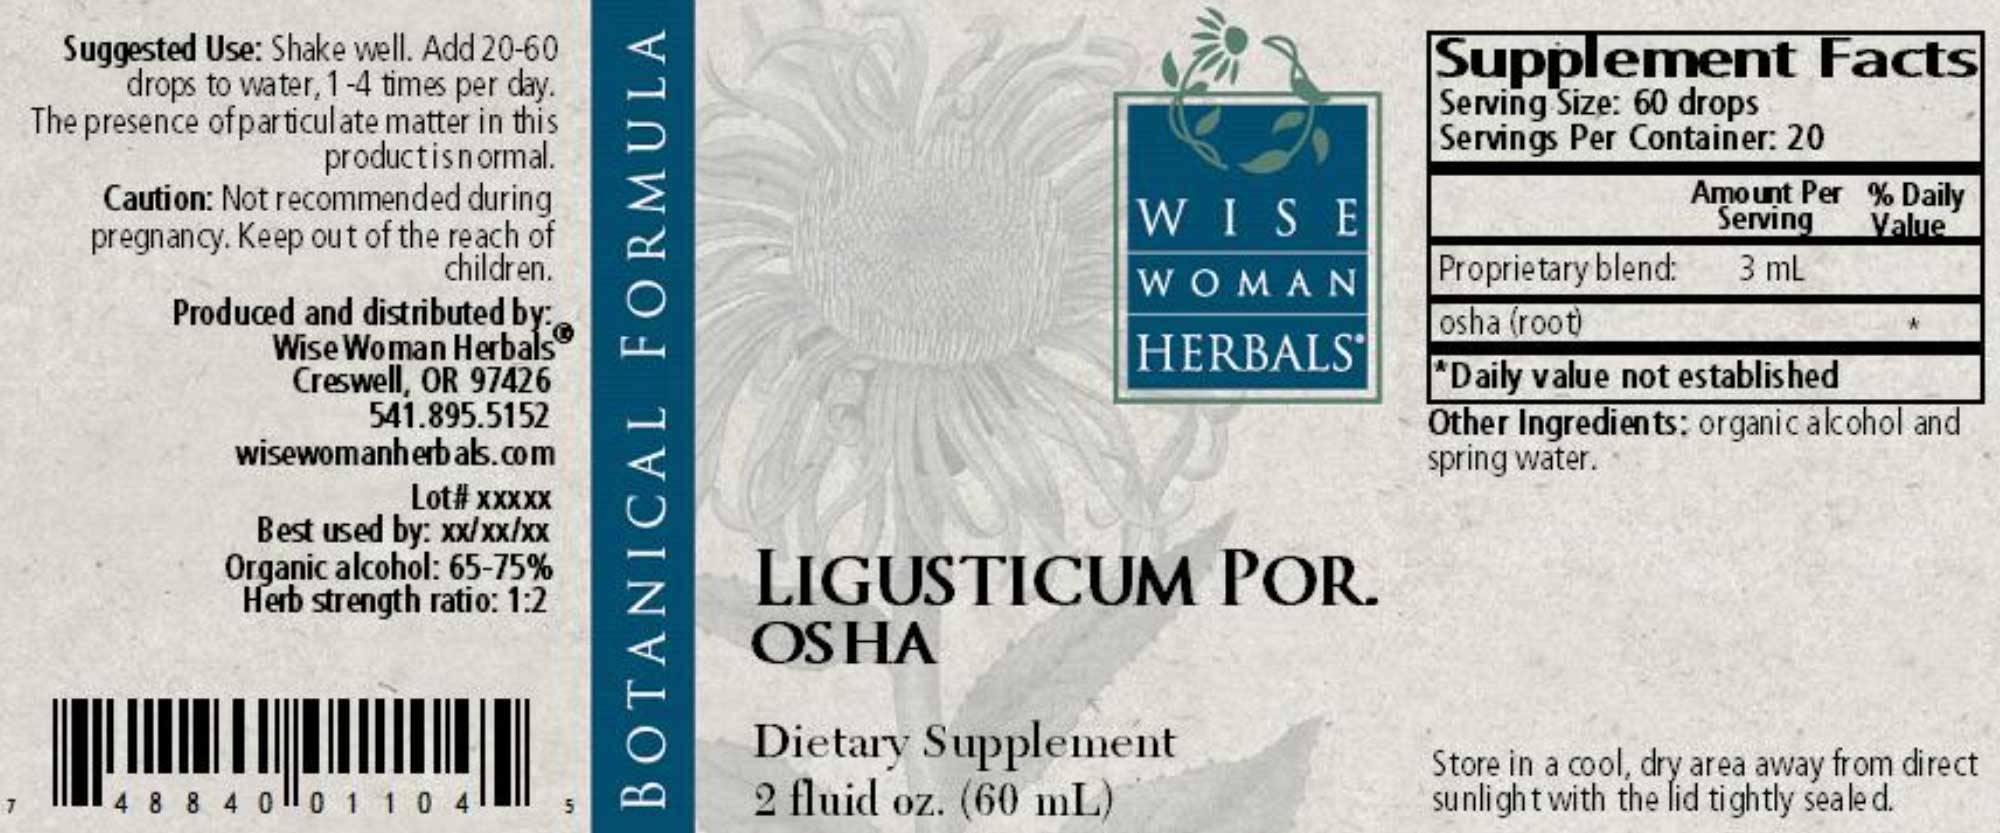 Wise Woman Herbals Ligusticum Porteri Osha Label